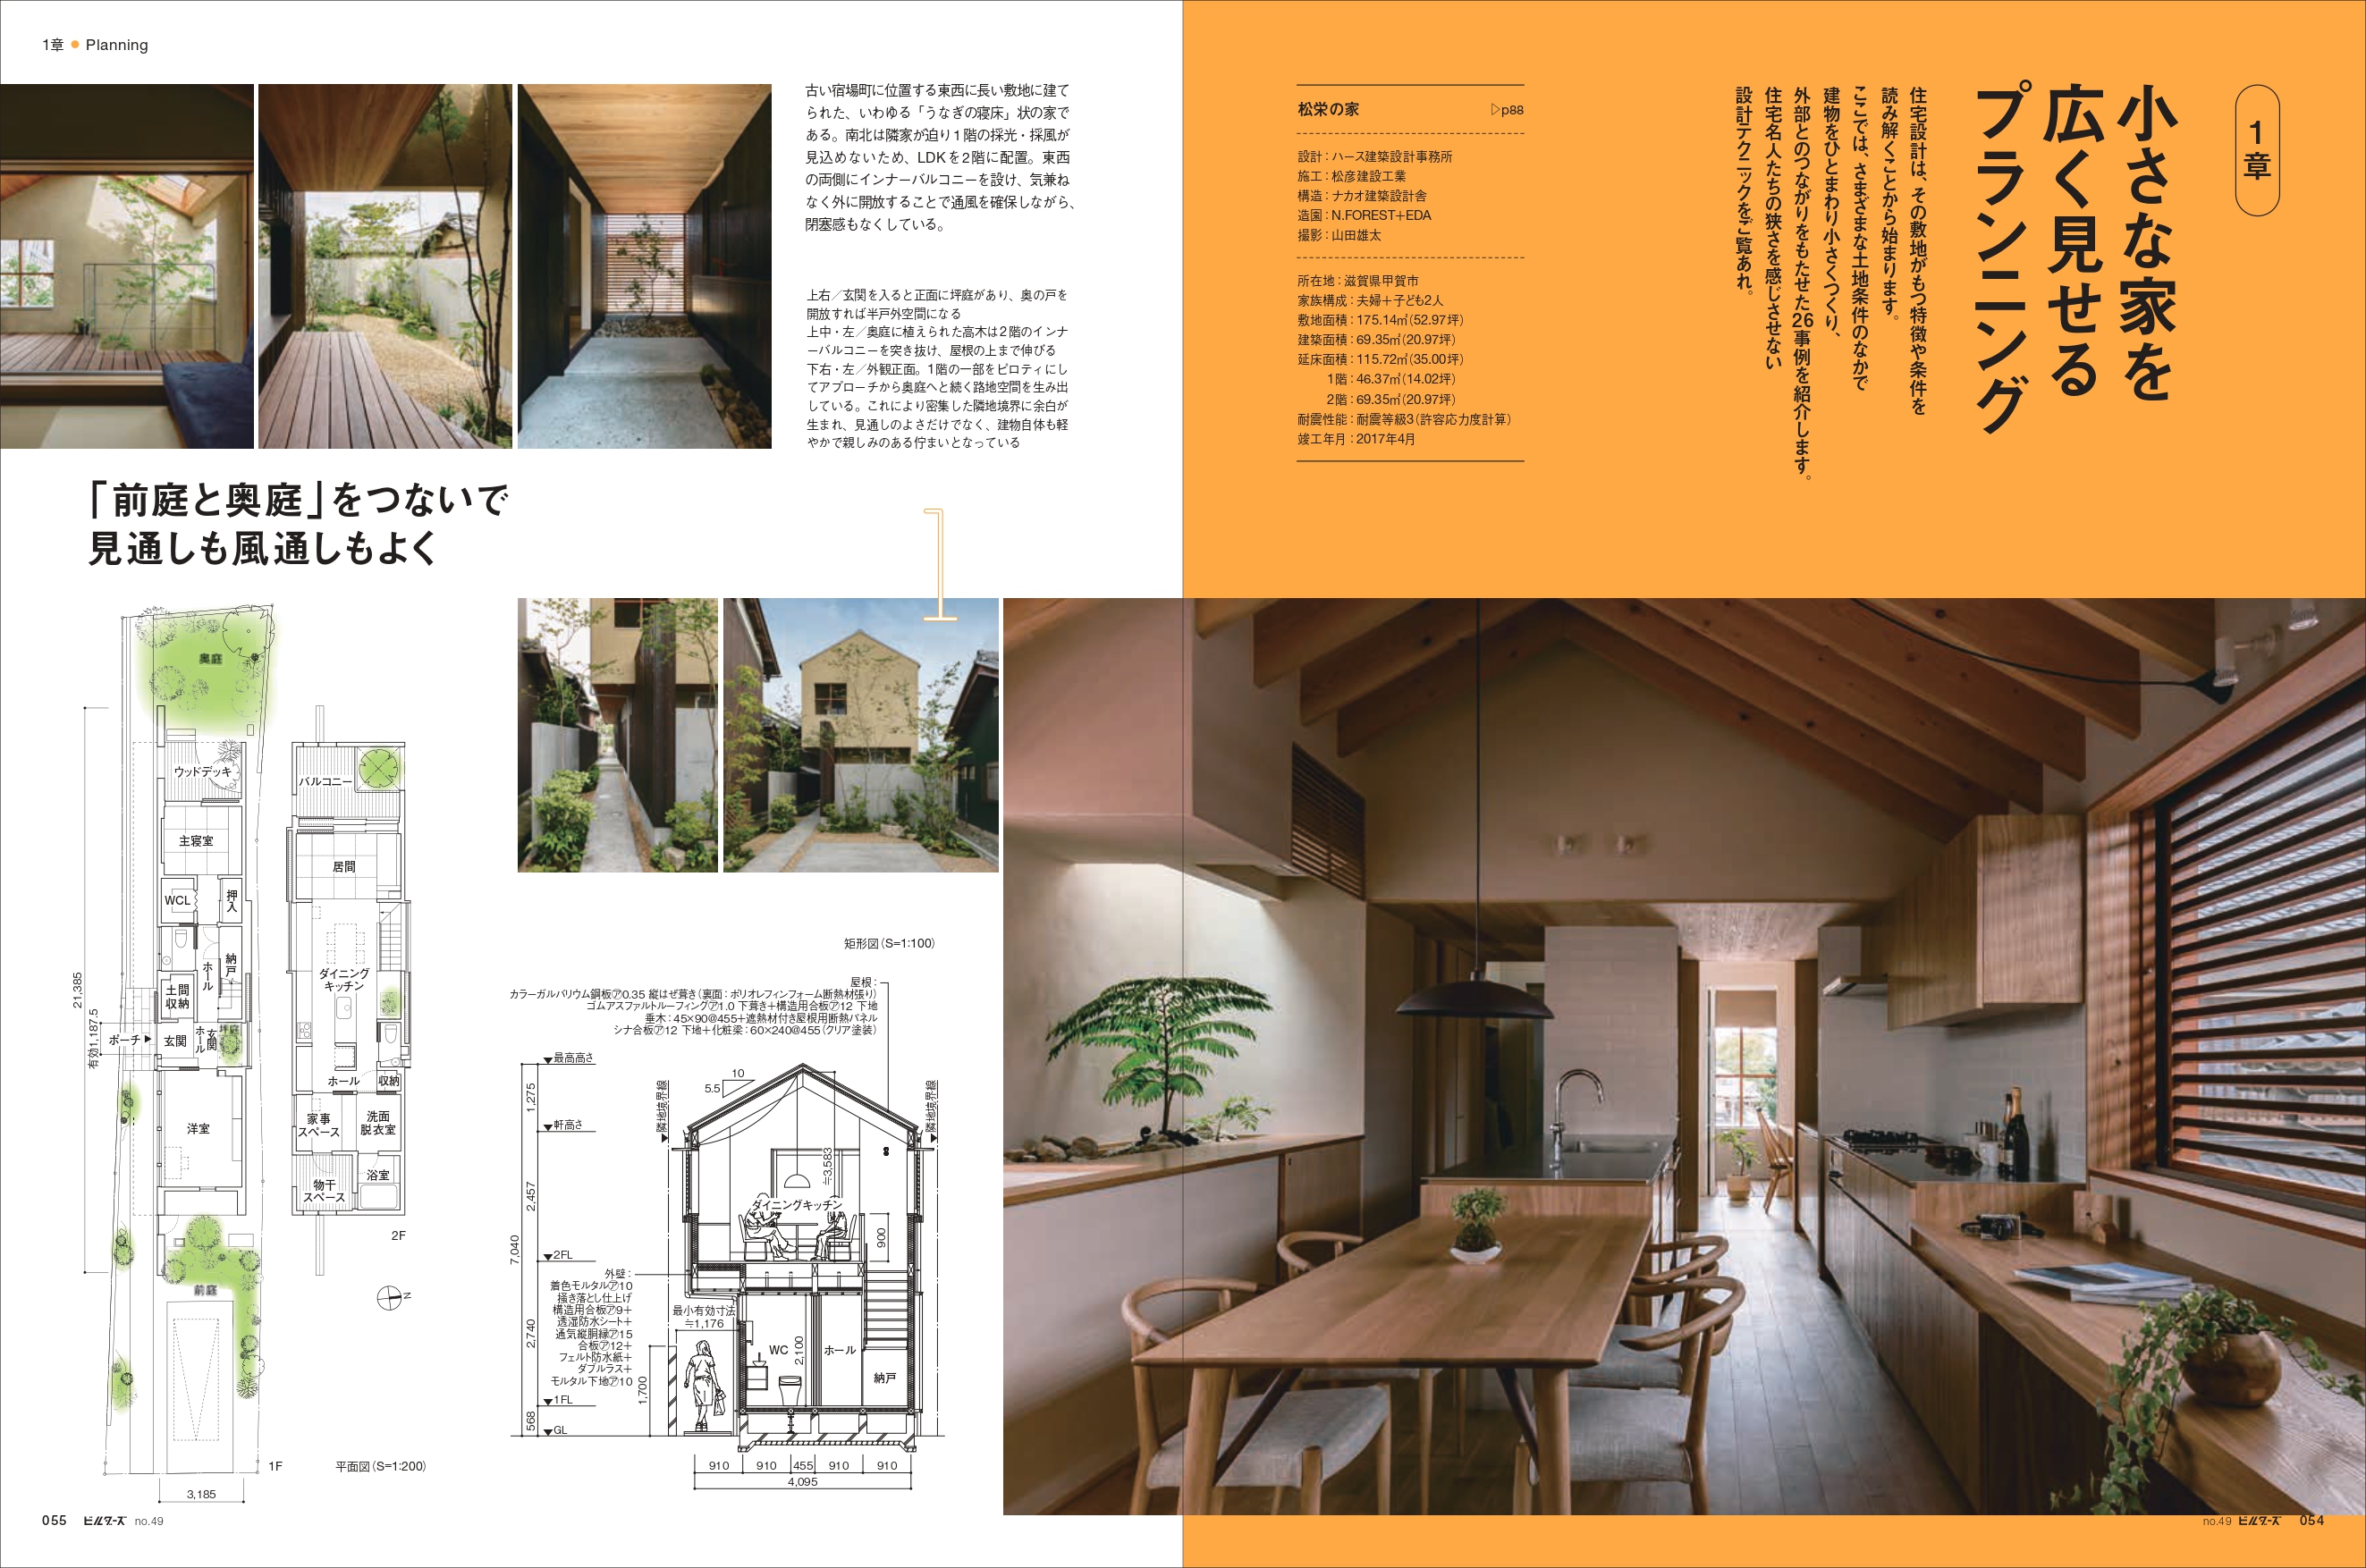 X-Knowledge | 建築知識ビルダーズ49 小さな家の間取りと庭